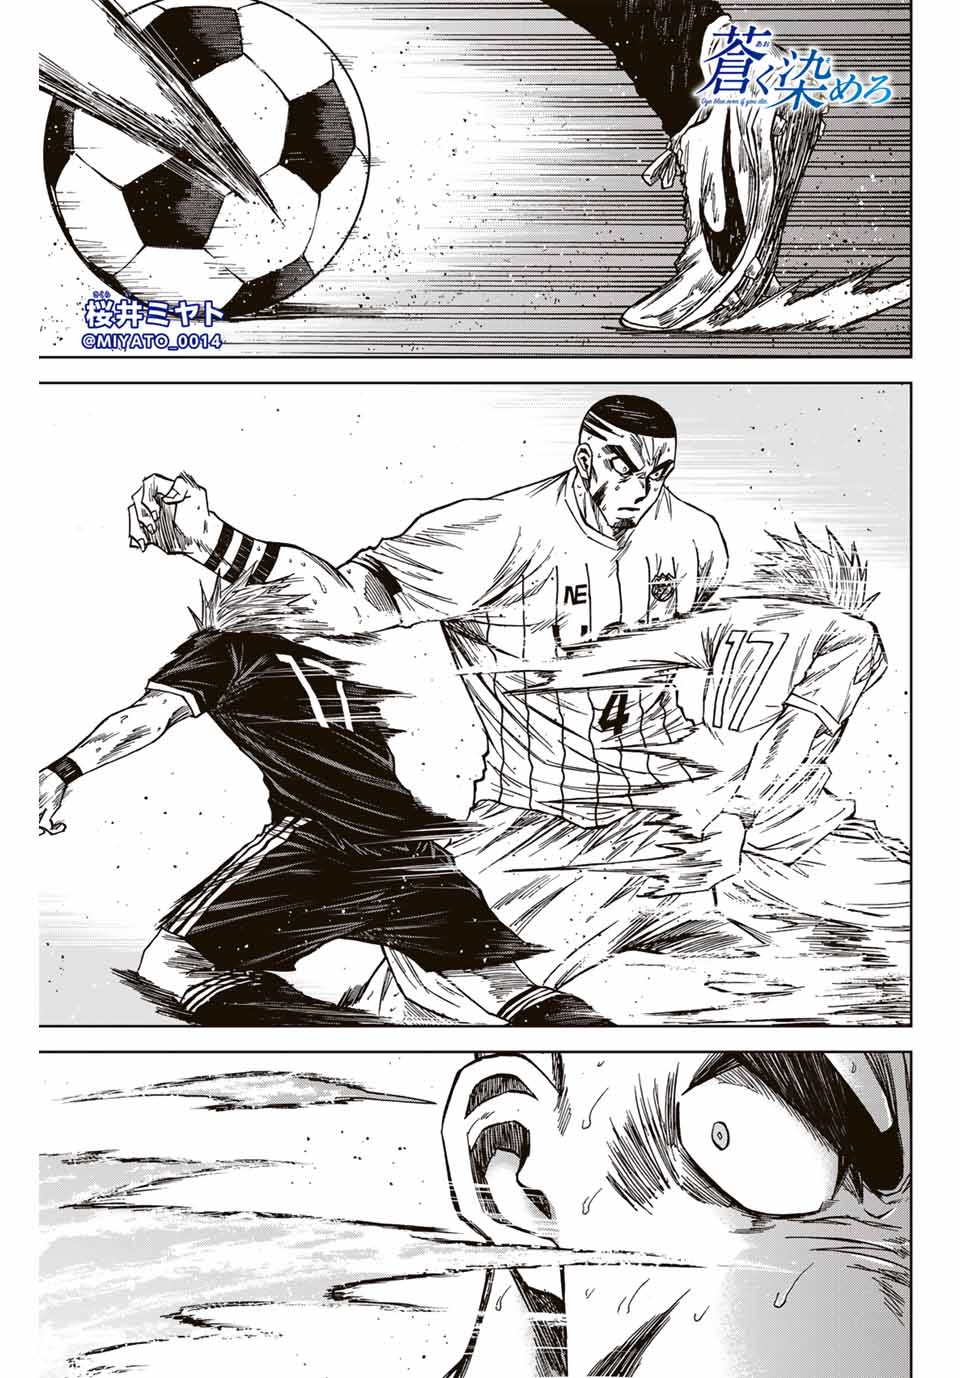 Aoku Somero - Chapter 108 - Page 1